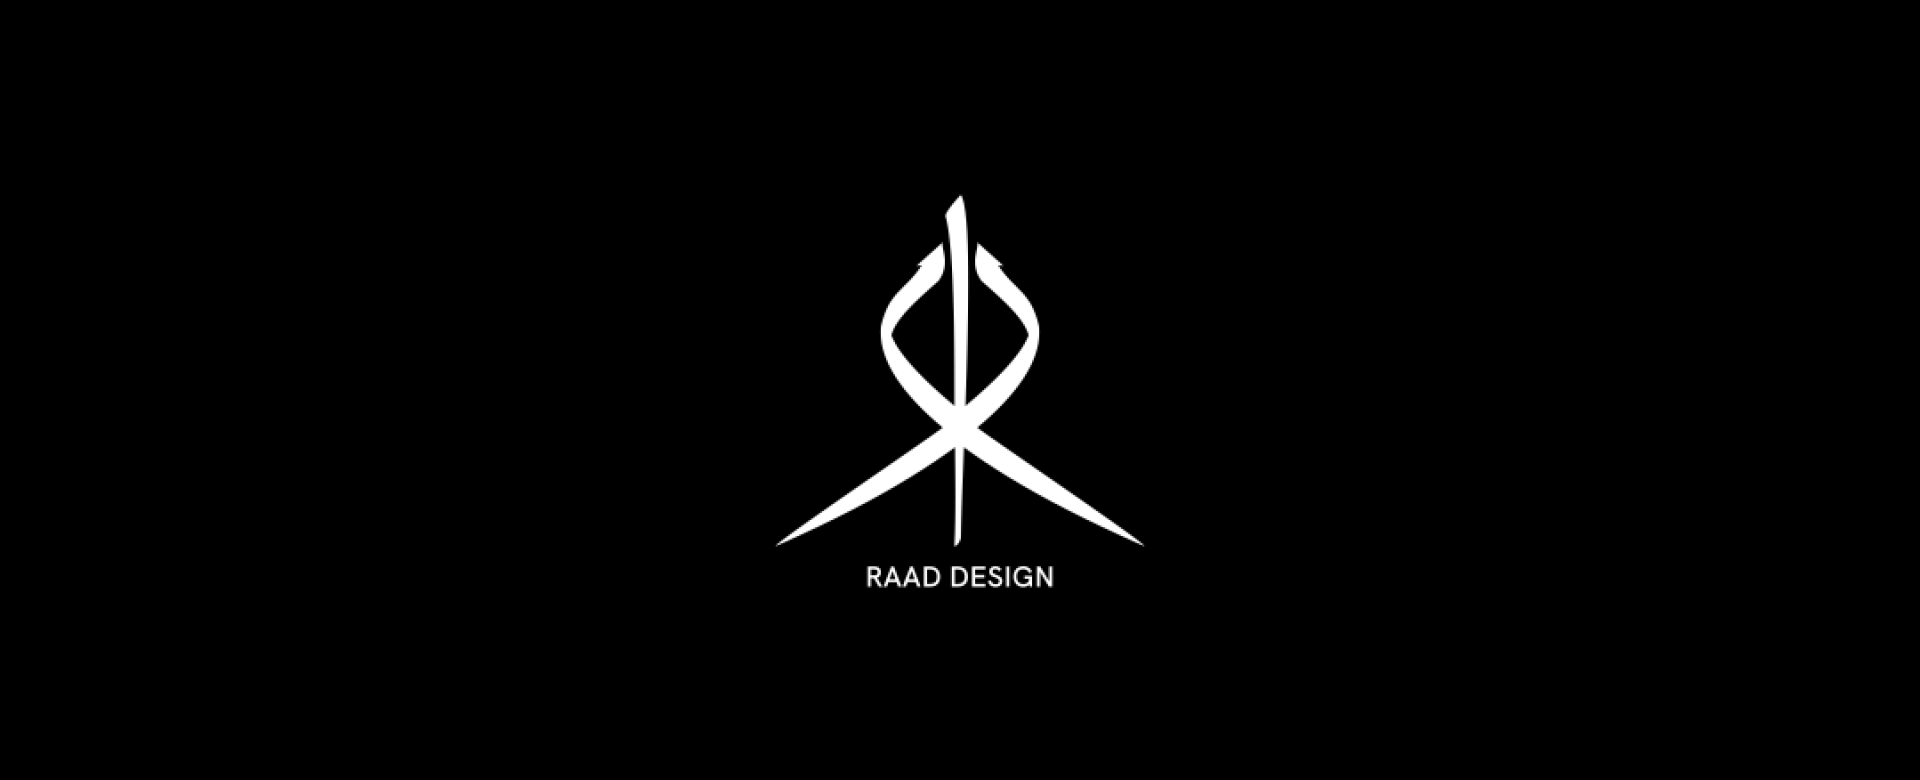 zen branding agency raad design project آژانس برندسازی ذن پروژه راد دیزاین (1)